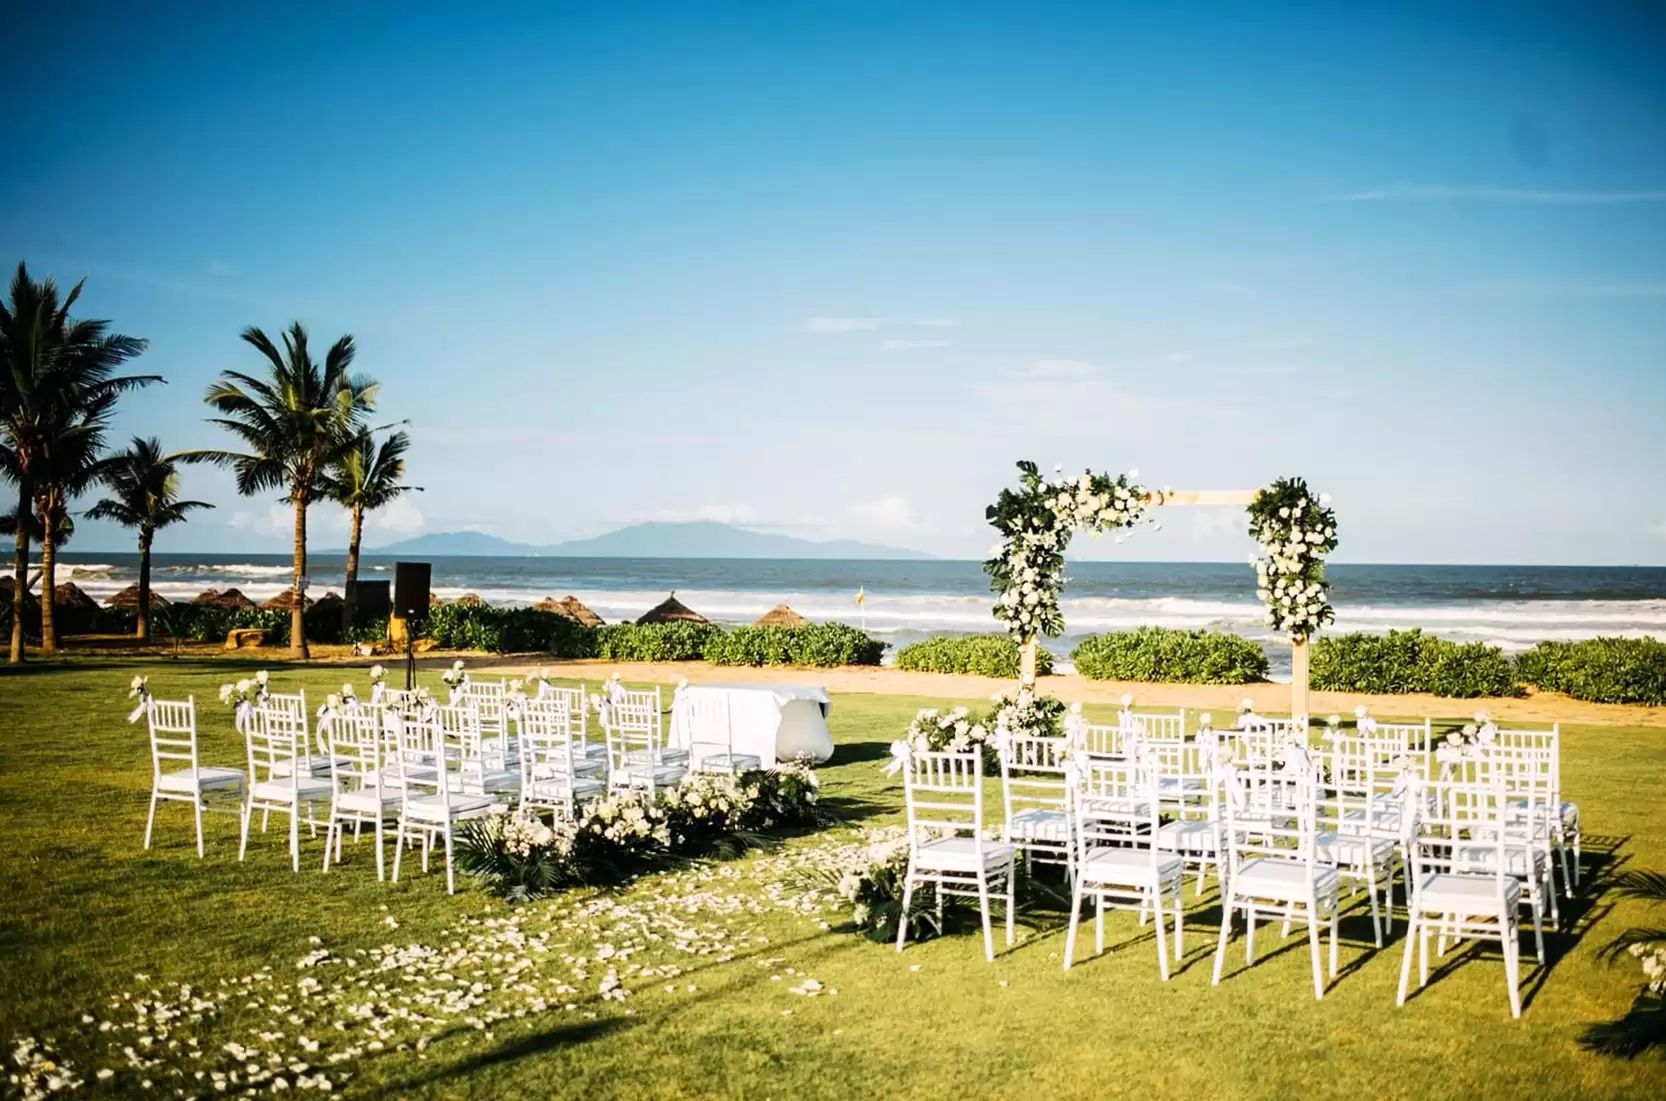 Bliss Hoi An Beach Resort & Wellness – Paradise for Beach Weddings